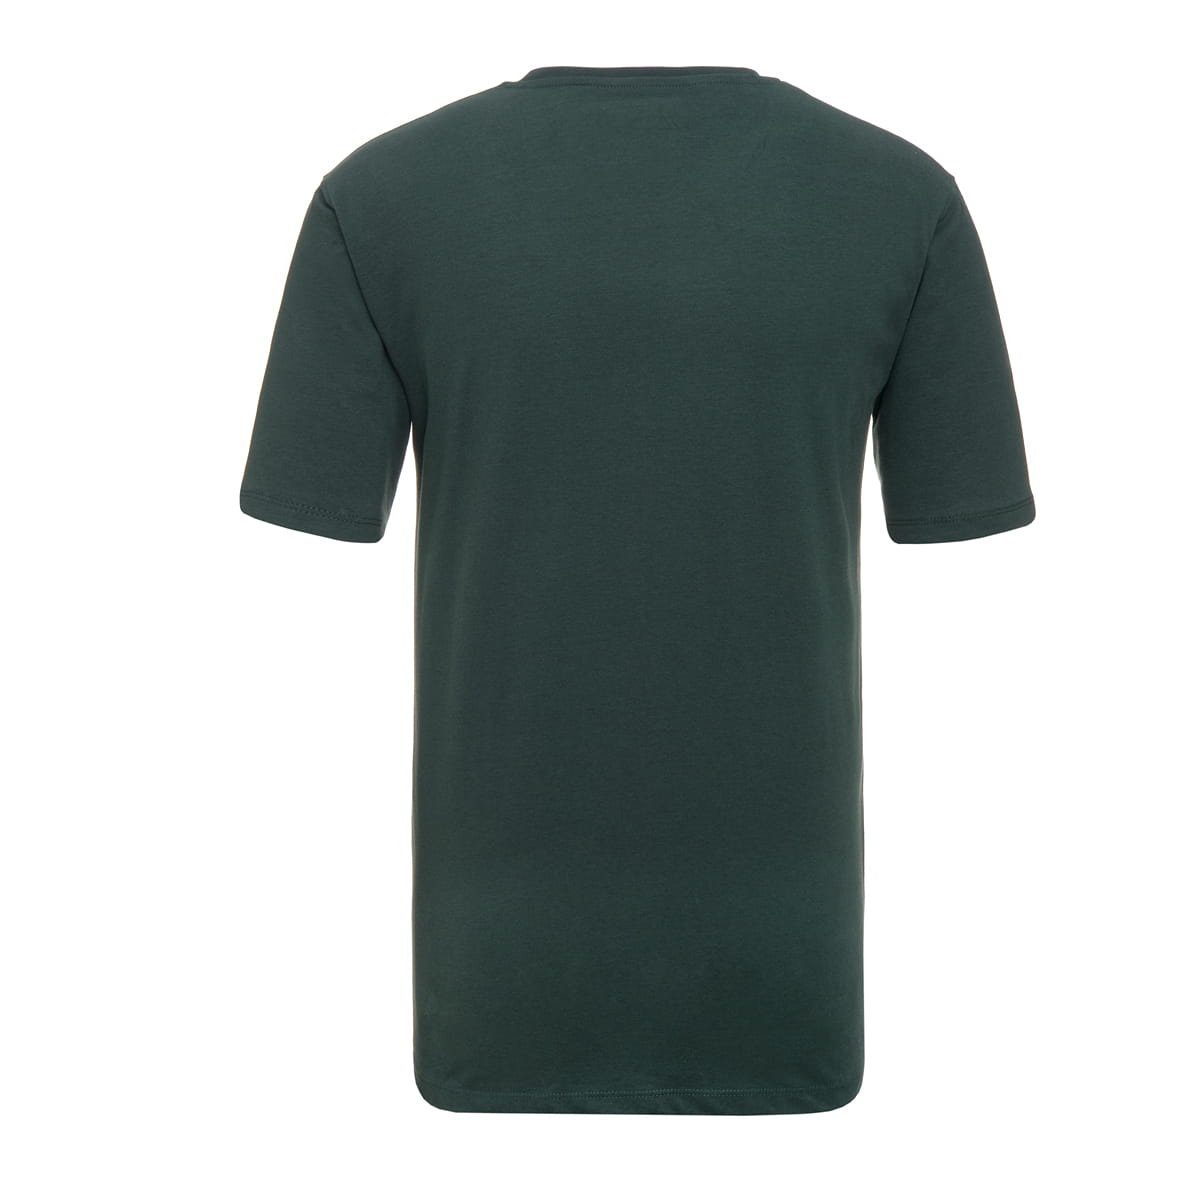 Platzangst T-Shirt T-Shirt Platzangst (1-tlg) T-Shirts - Logo Mountain XS- Grün